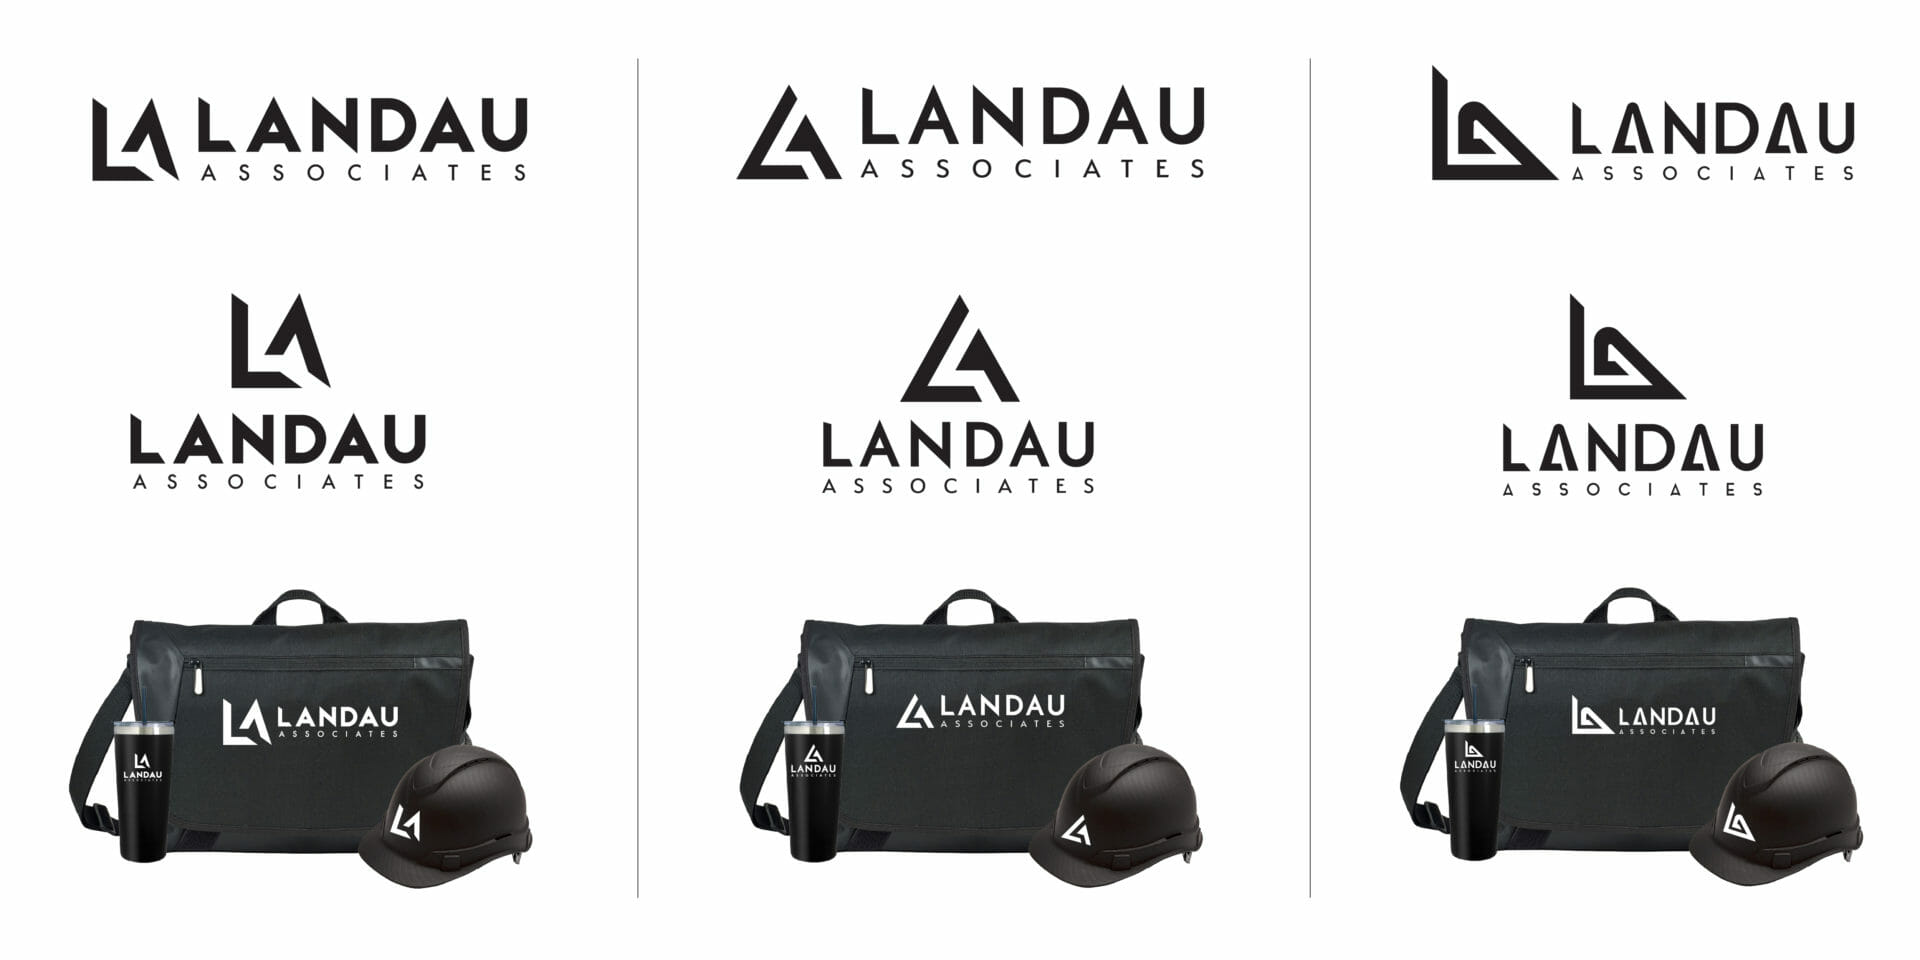 Landau Associates logo concetps